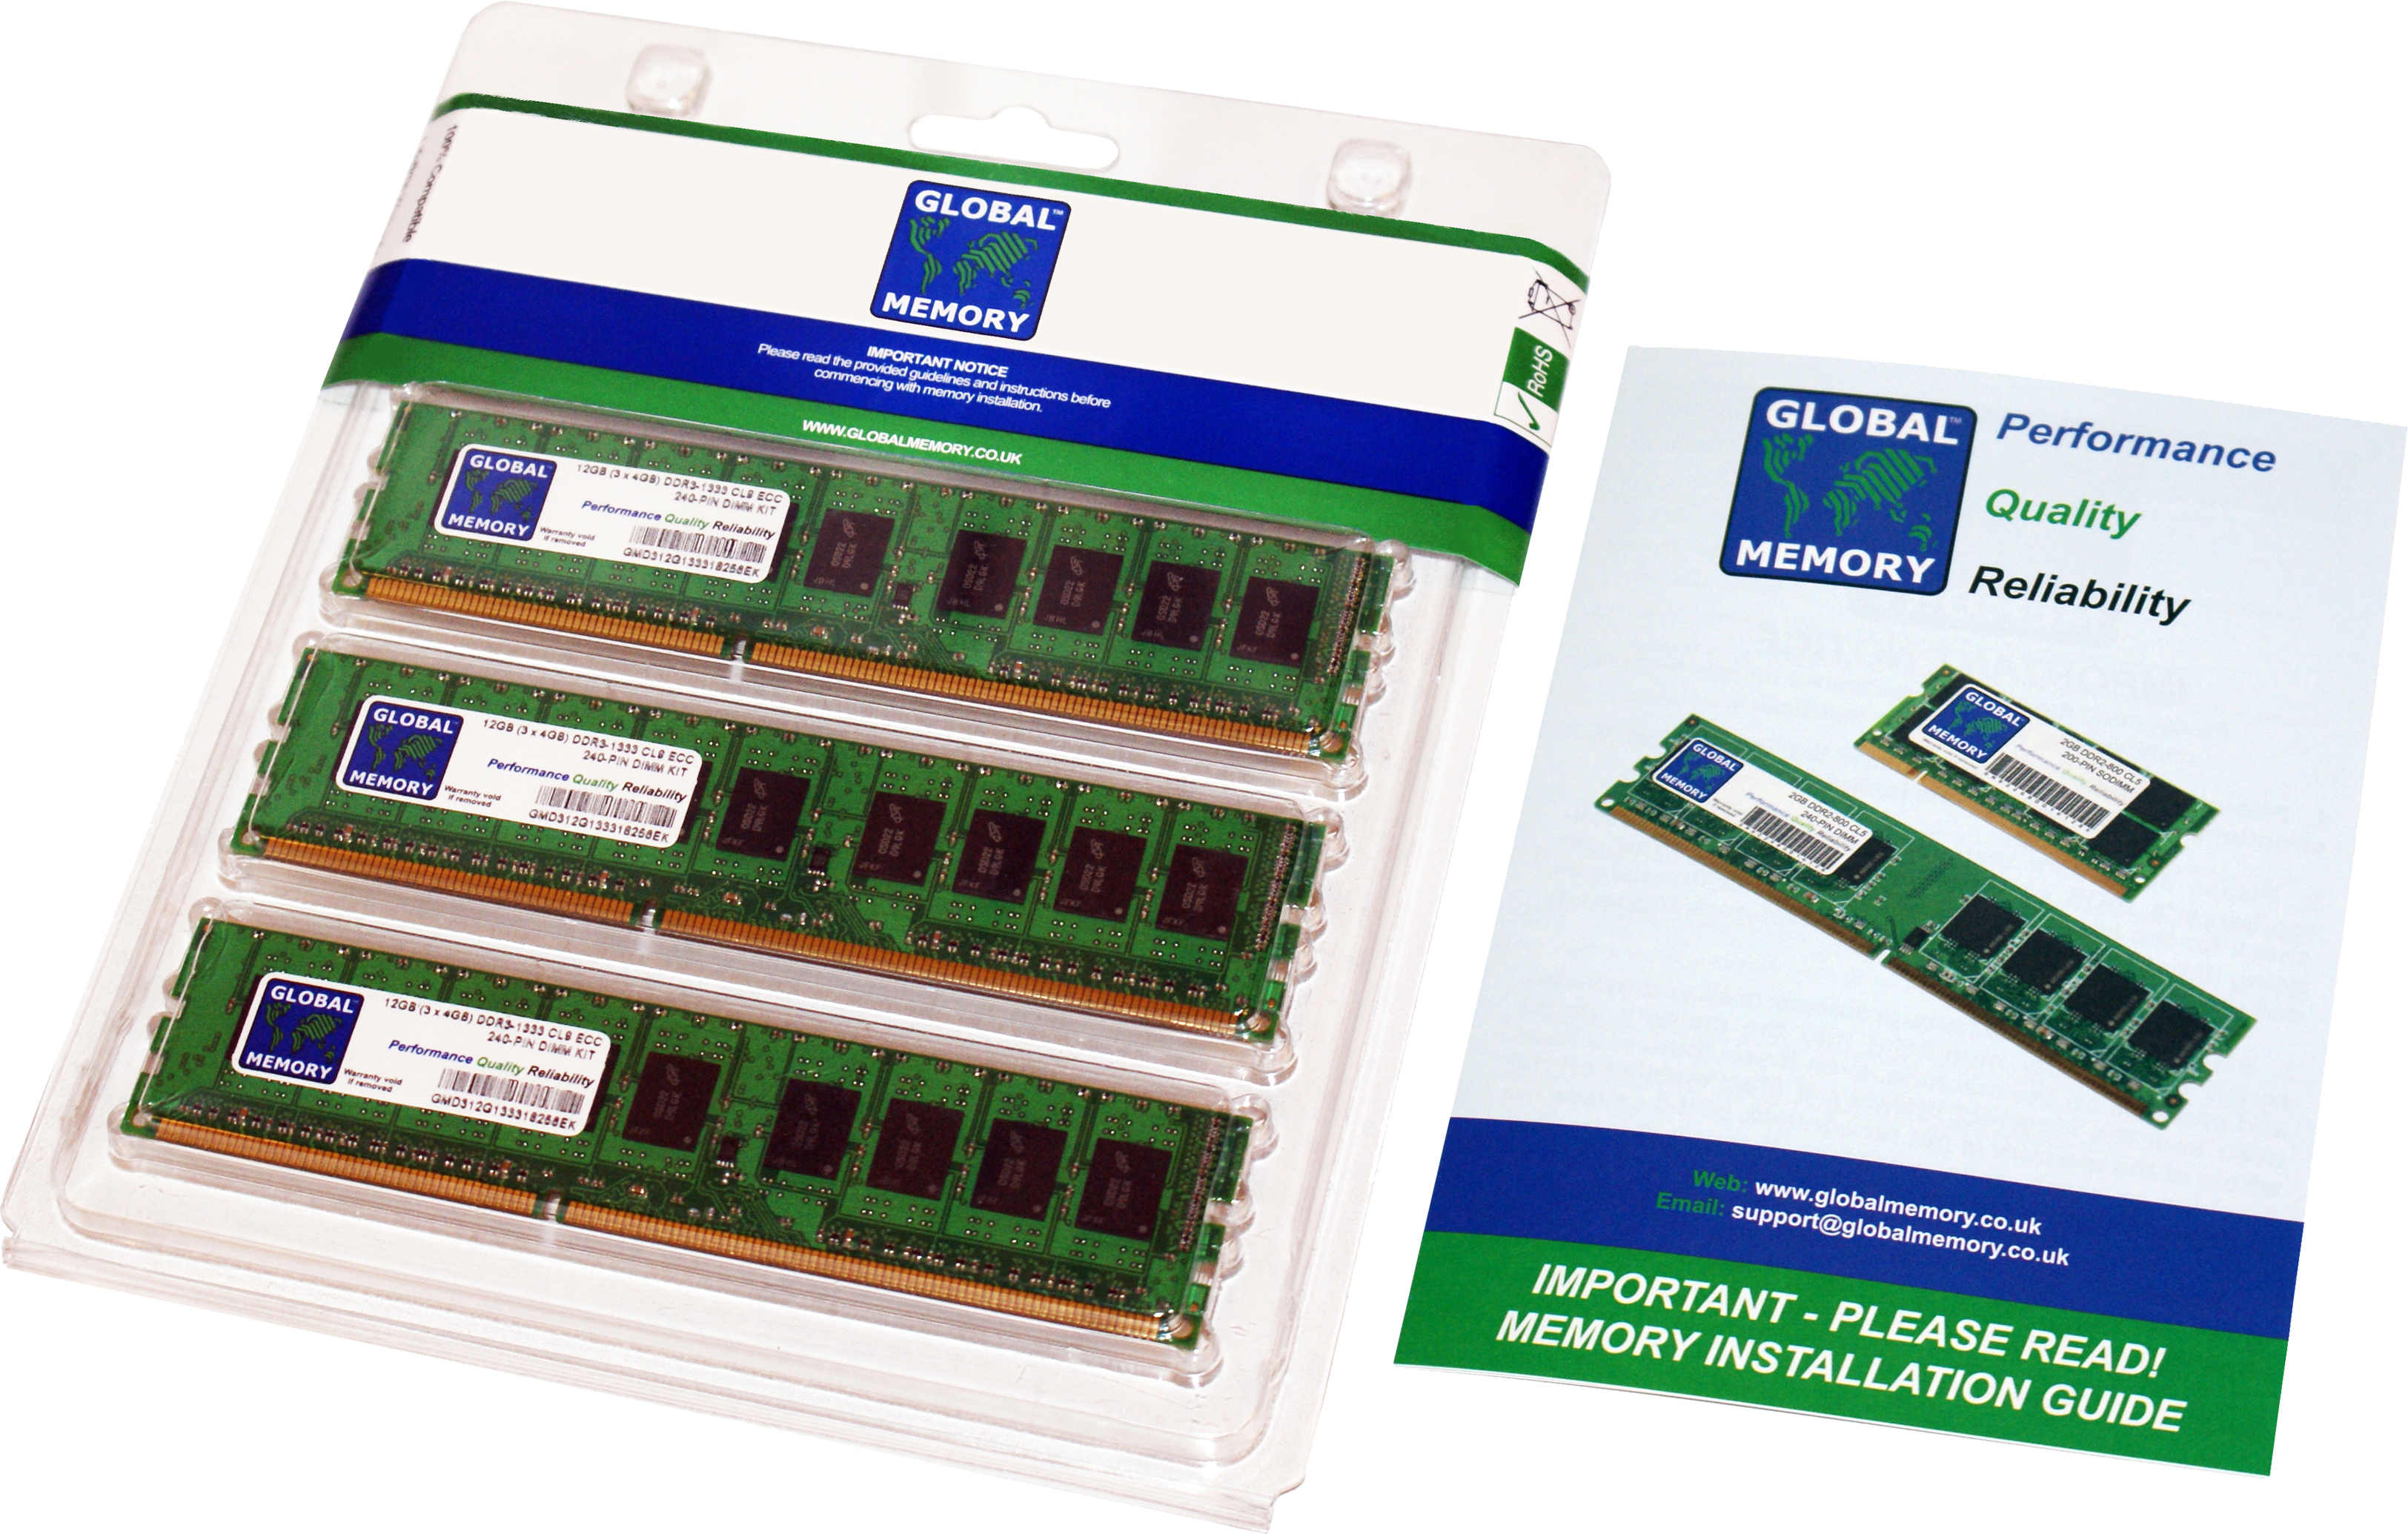 24GB (3 x 8GB) DDR3 1866MHz PC3-14900 240-PIN ECC DIMM (UDIMM) MEMORY RAM KIT FOR FUJITSU SERVERS/WORKSTATIONS